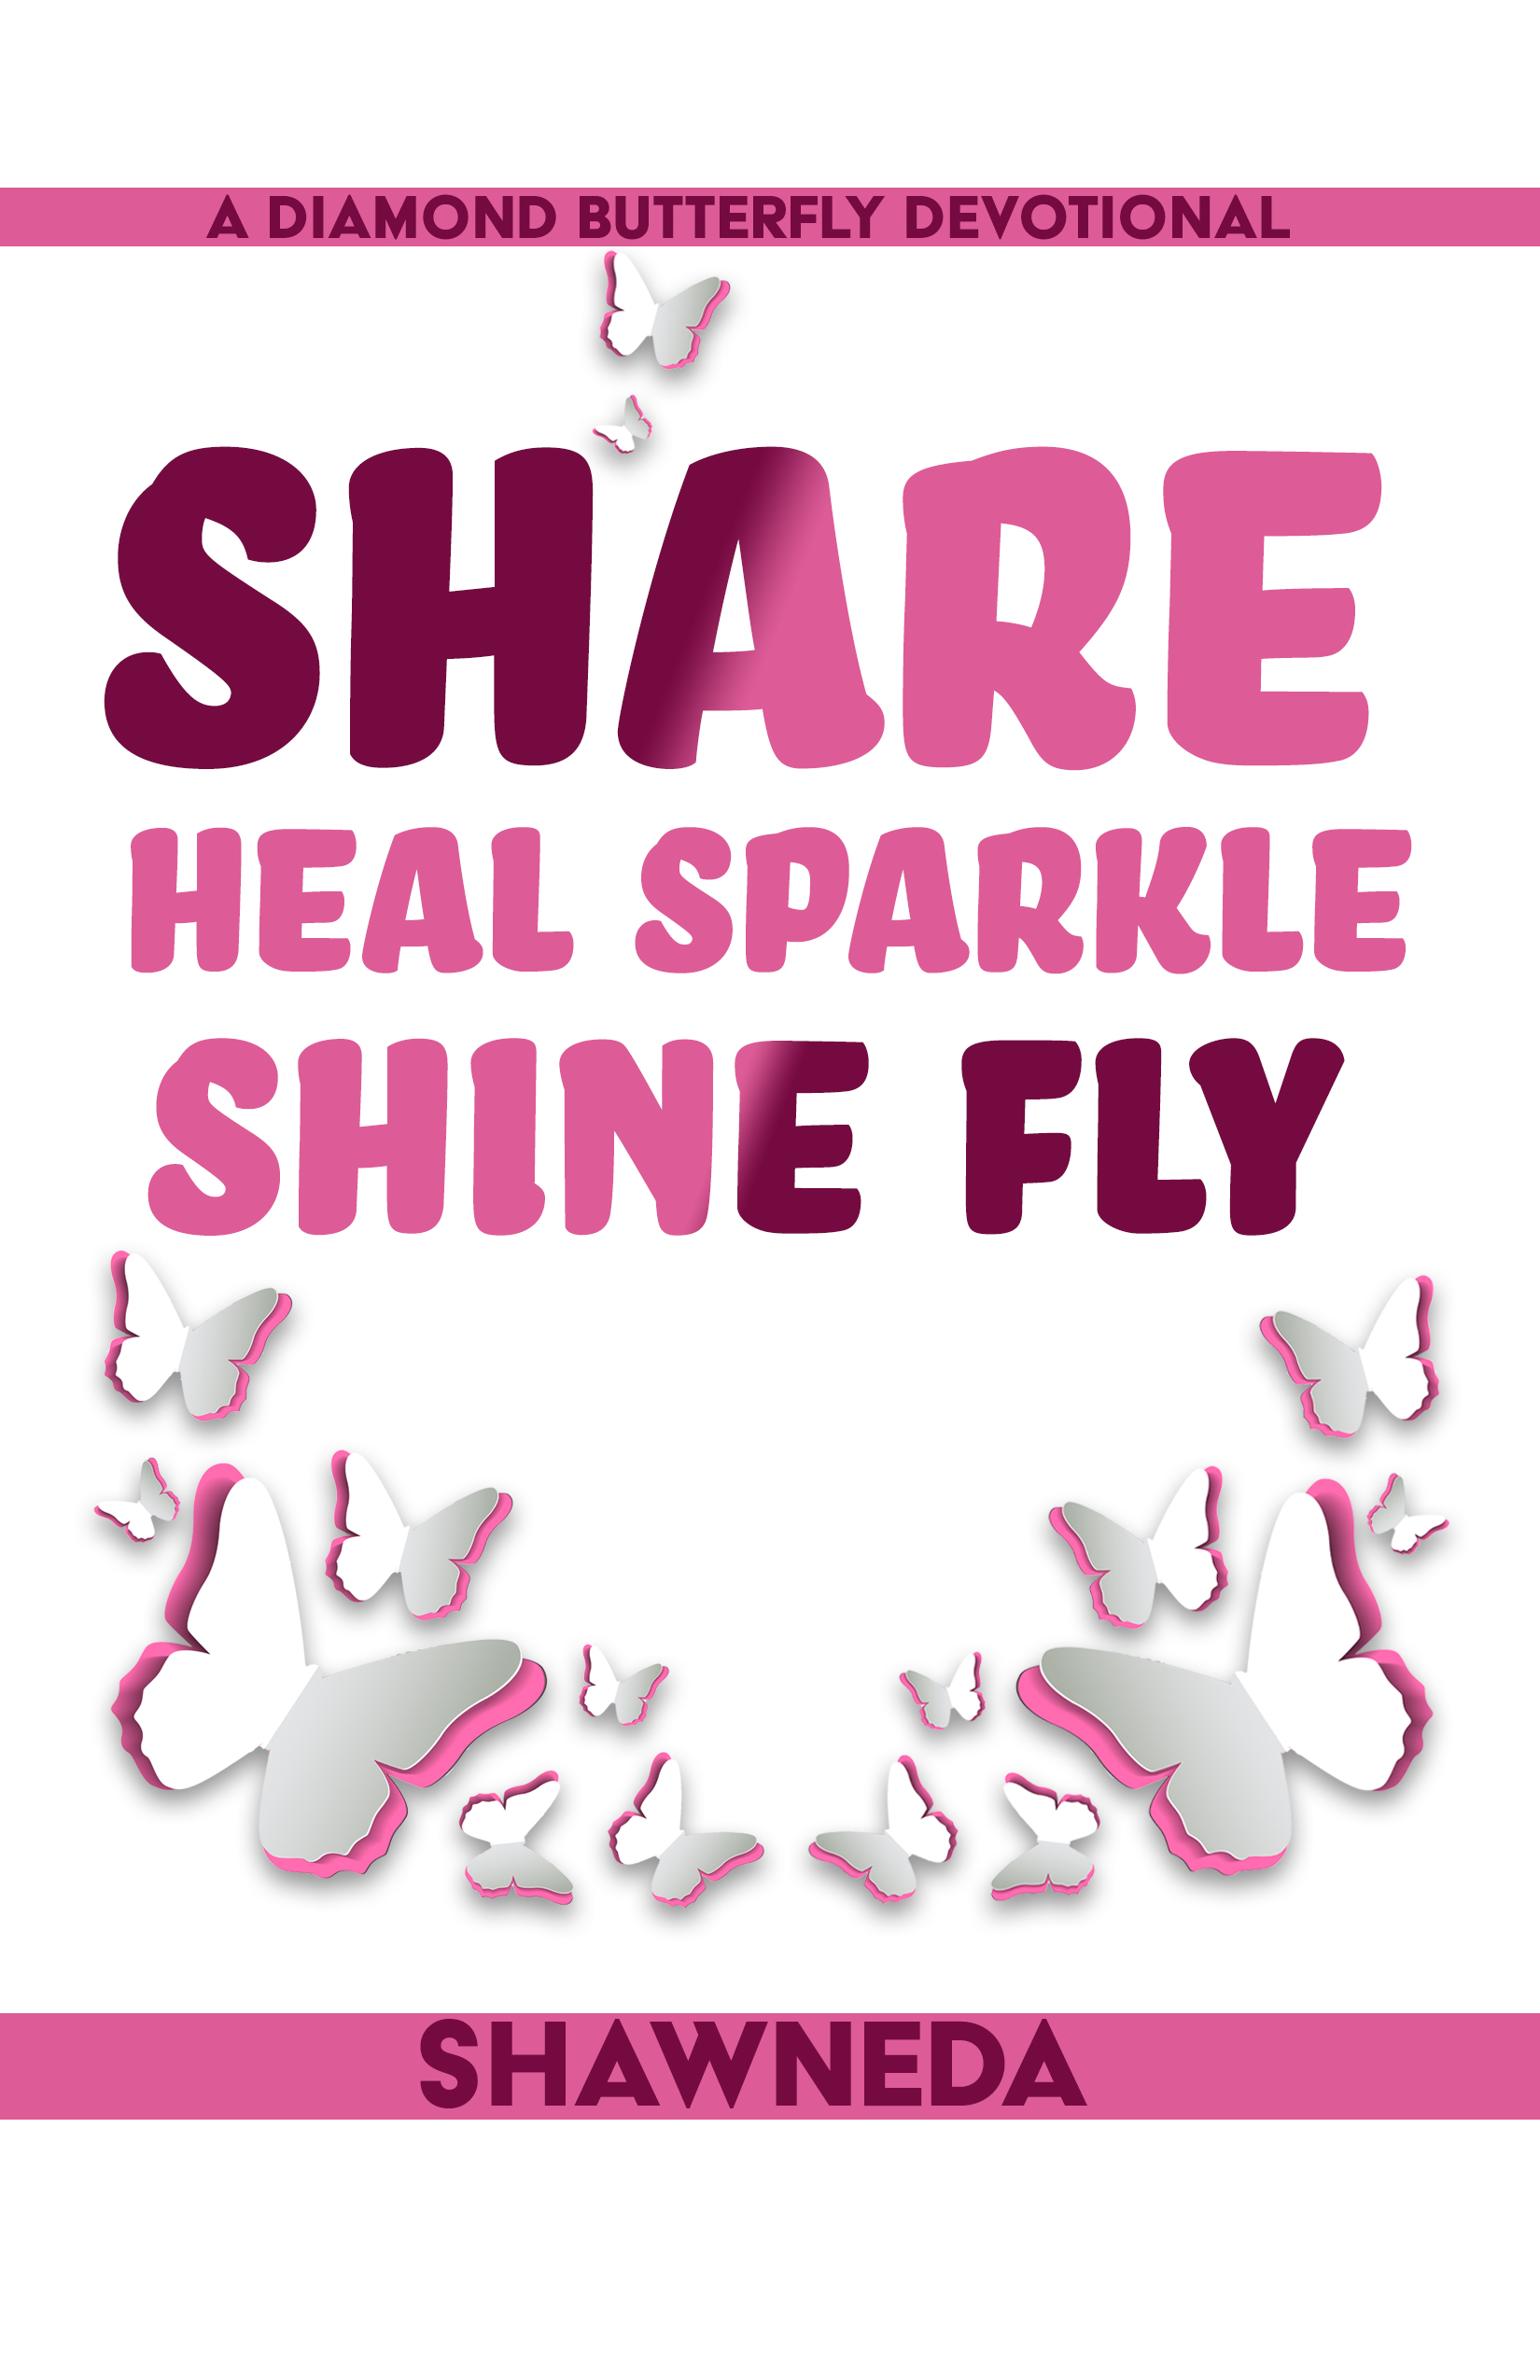 Diamond Butterfly: Share Heal Sparkle Shine Fly